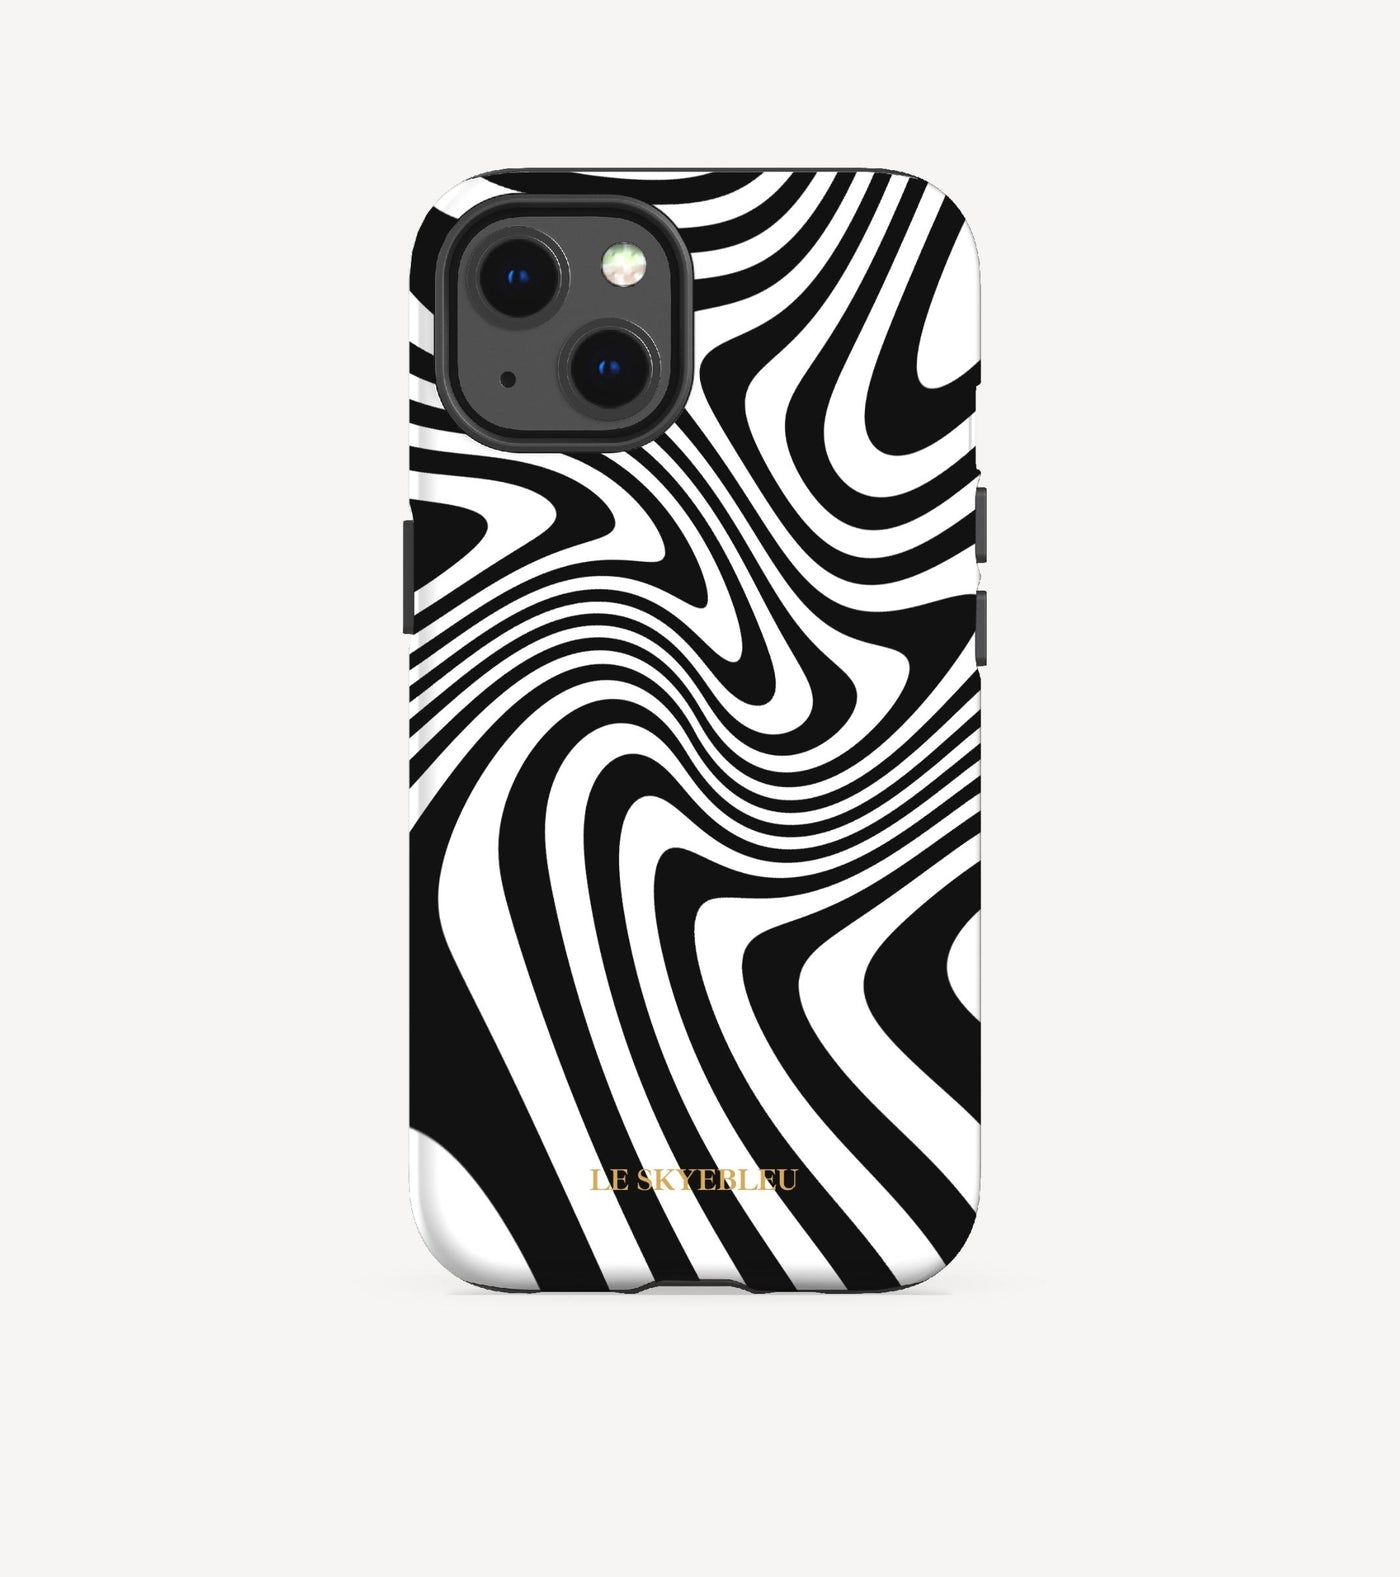 Zebra Swirl